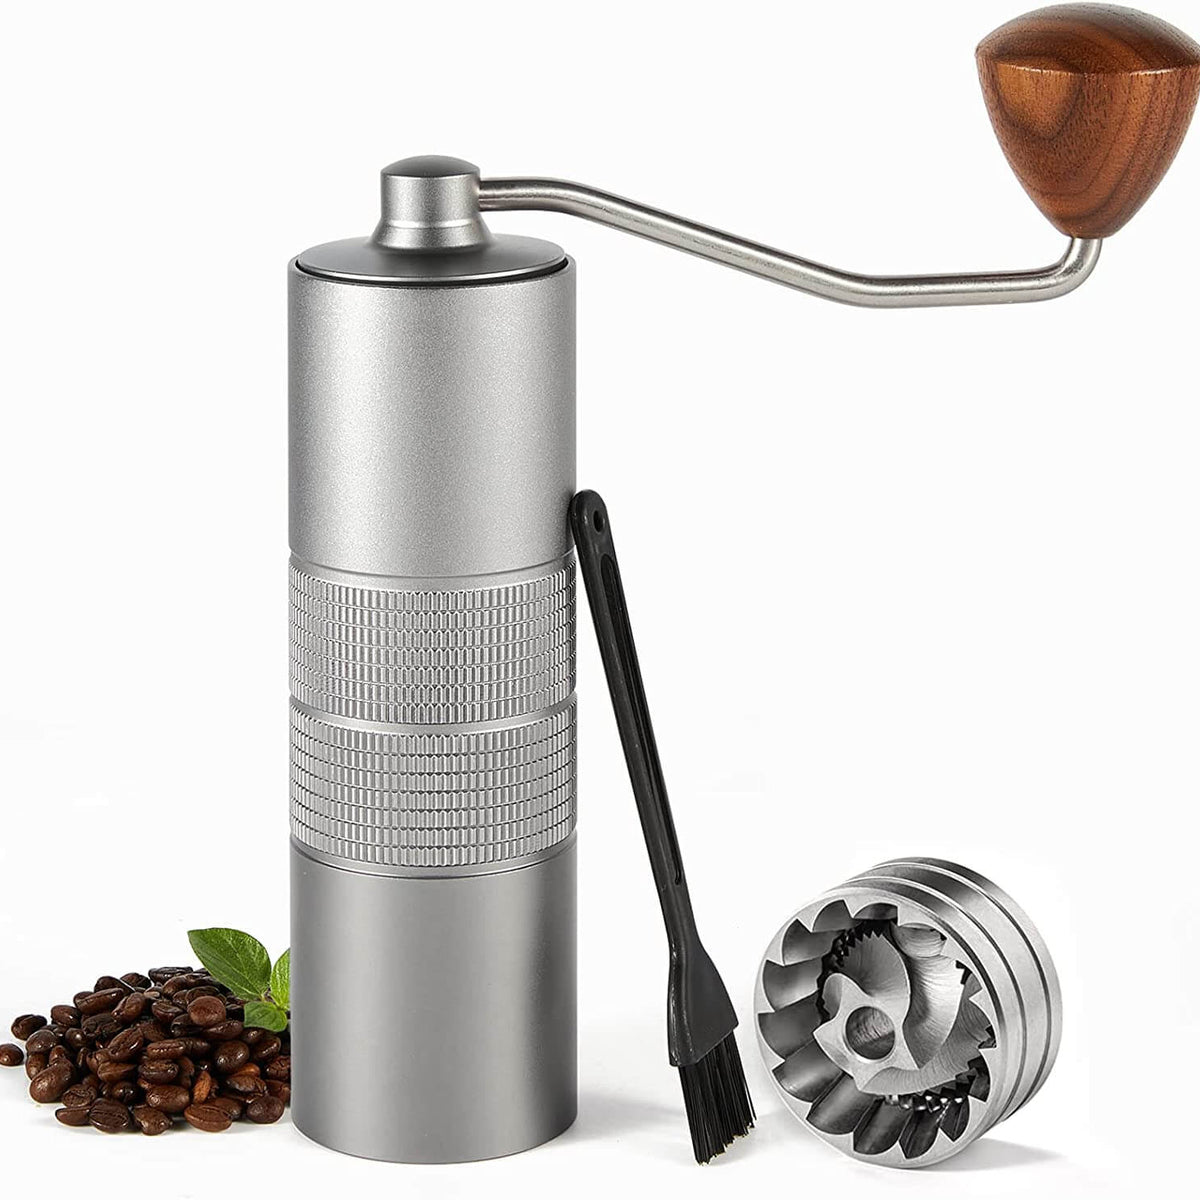 COFFEE GRINDER - Binondo Metalcraft and Bakery Equipment